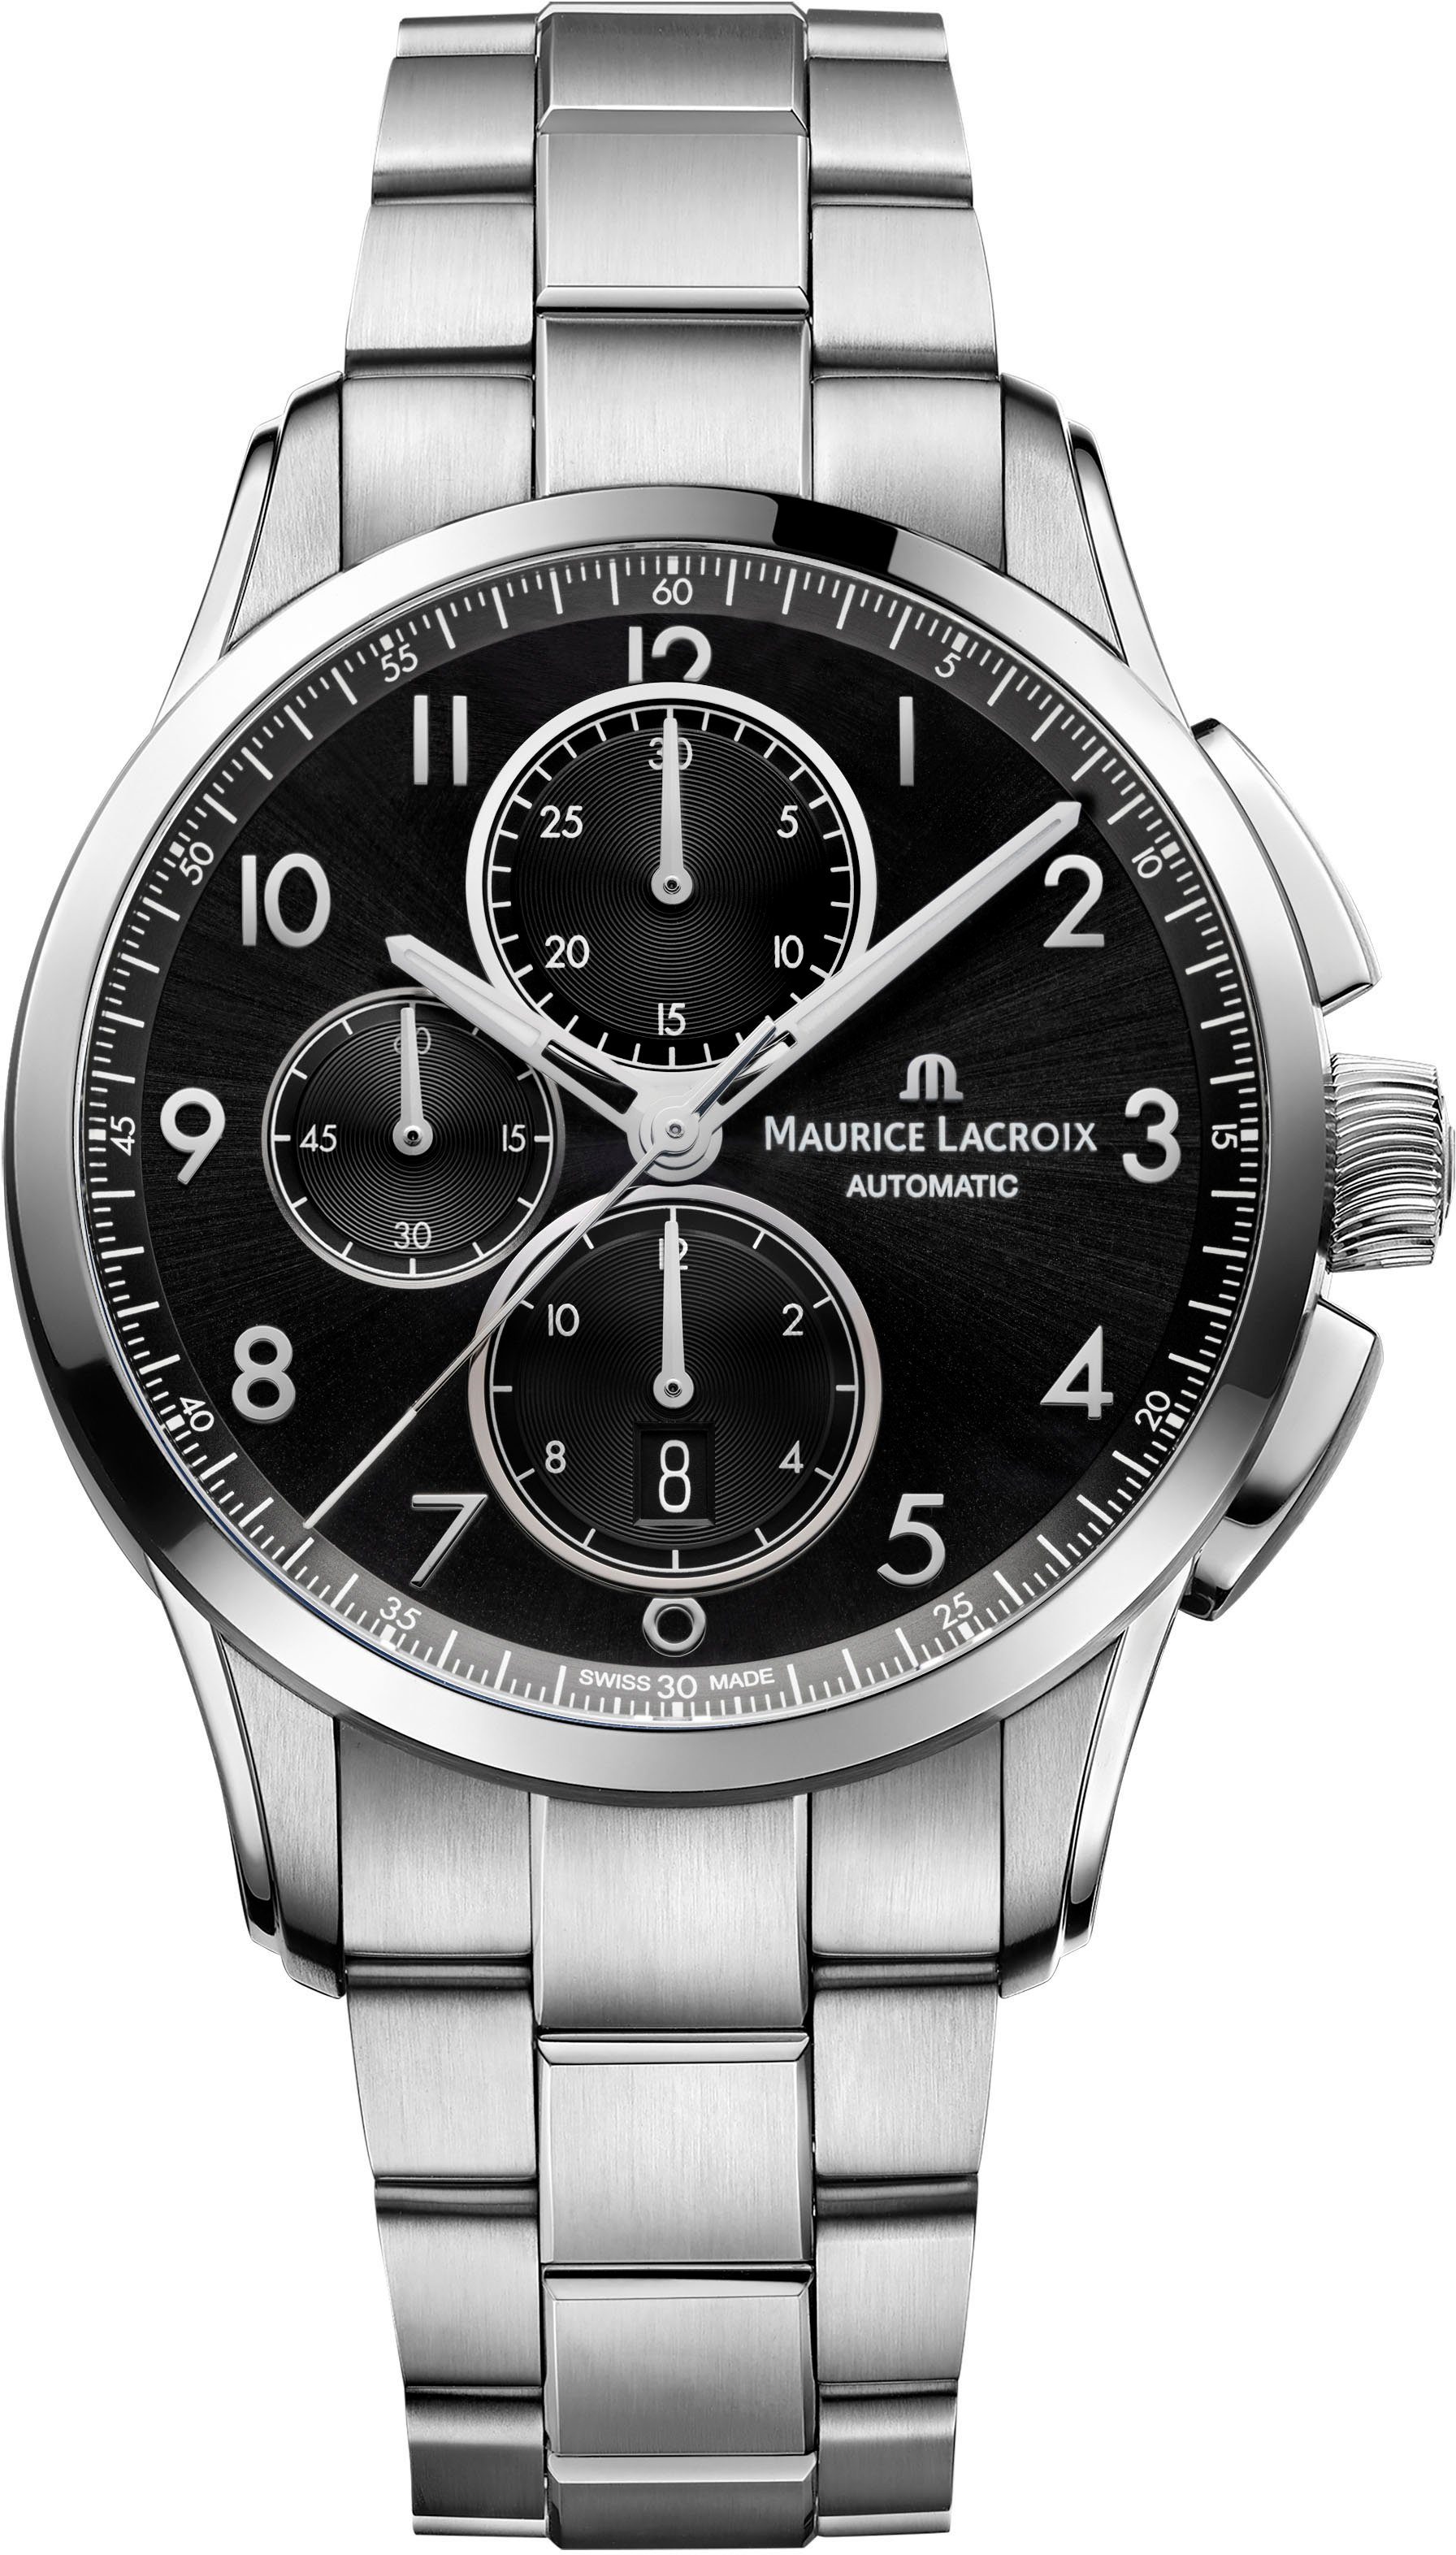 MAURICE LACROIX Chronograph Pontos Chronographe Date, PT6388-SS002-320-1, Automatik | Schweizer Uhren